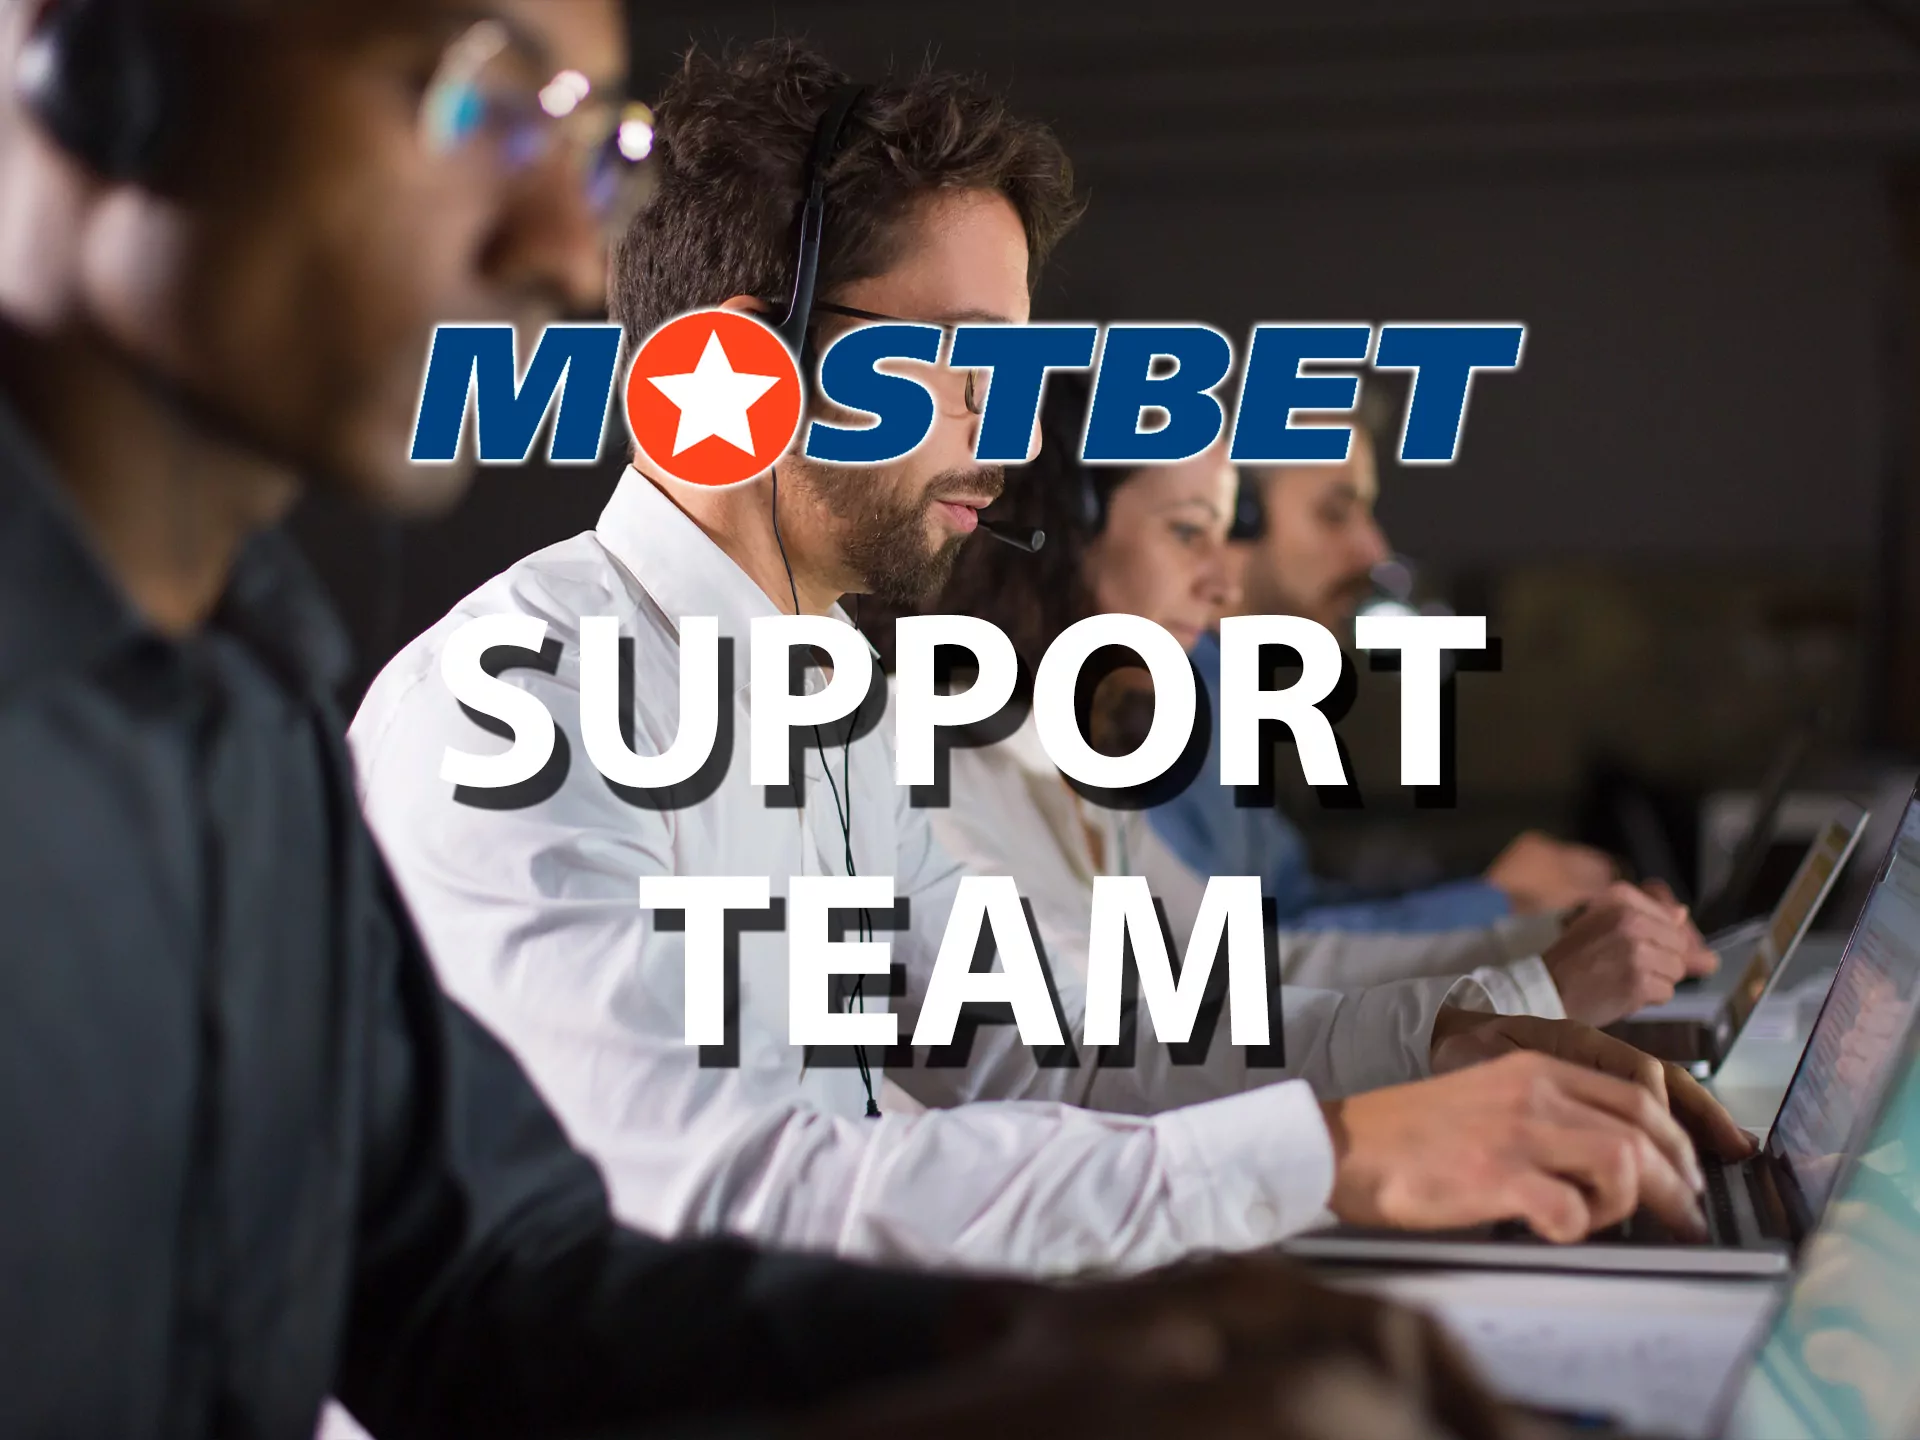 Mostbet کی سپورٹ ٹیم 24/7 کام کرتی ہے اور آپ کی مدد کے لیے ہمیشہ موجود رہتی ہے۔